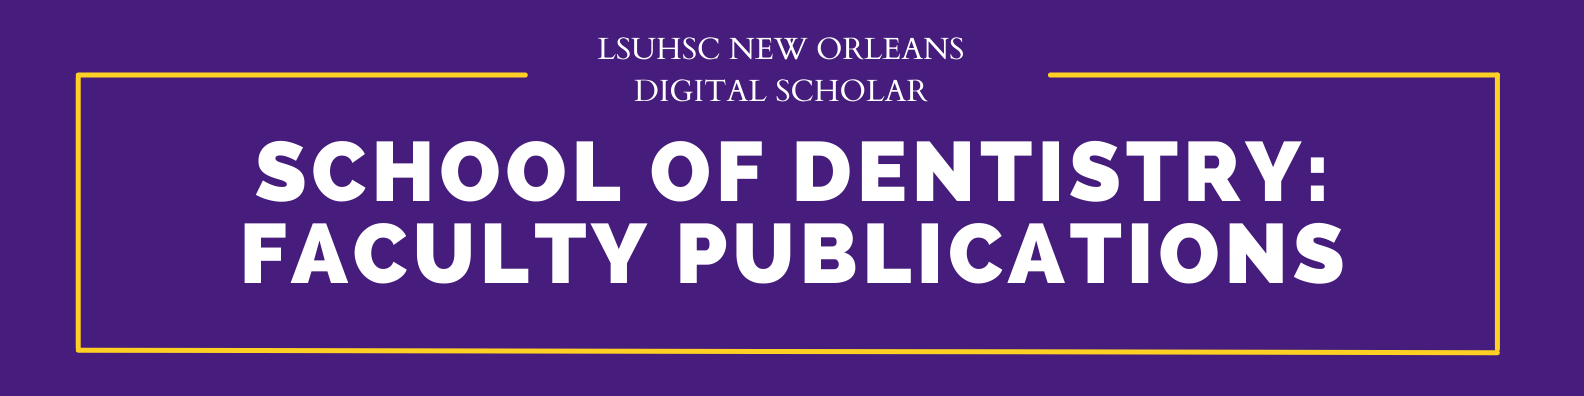 School of Dentistry Faculty Publications